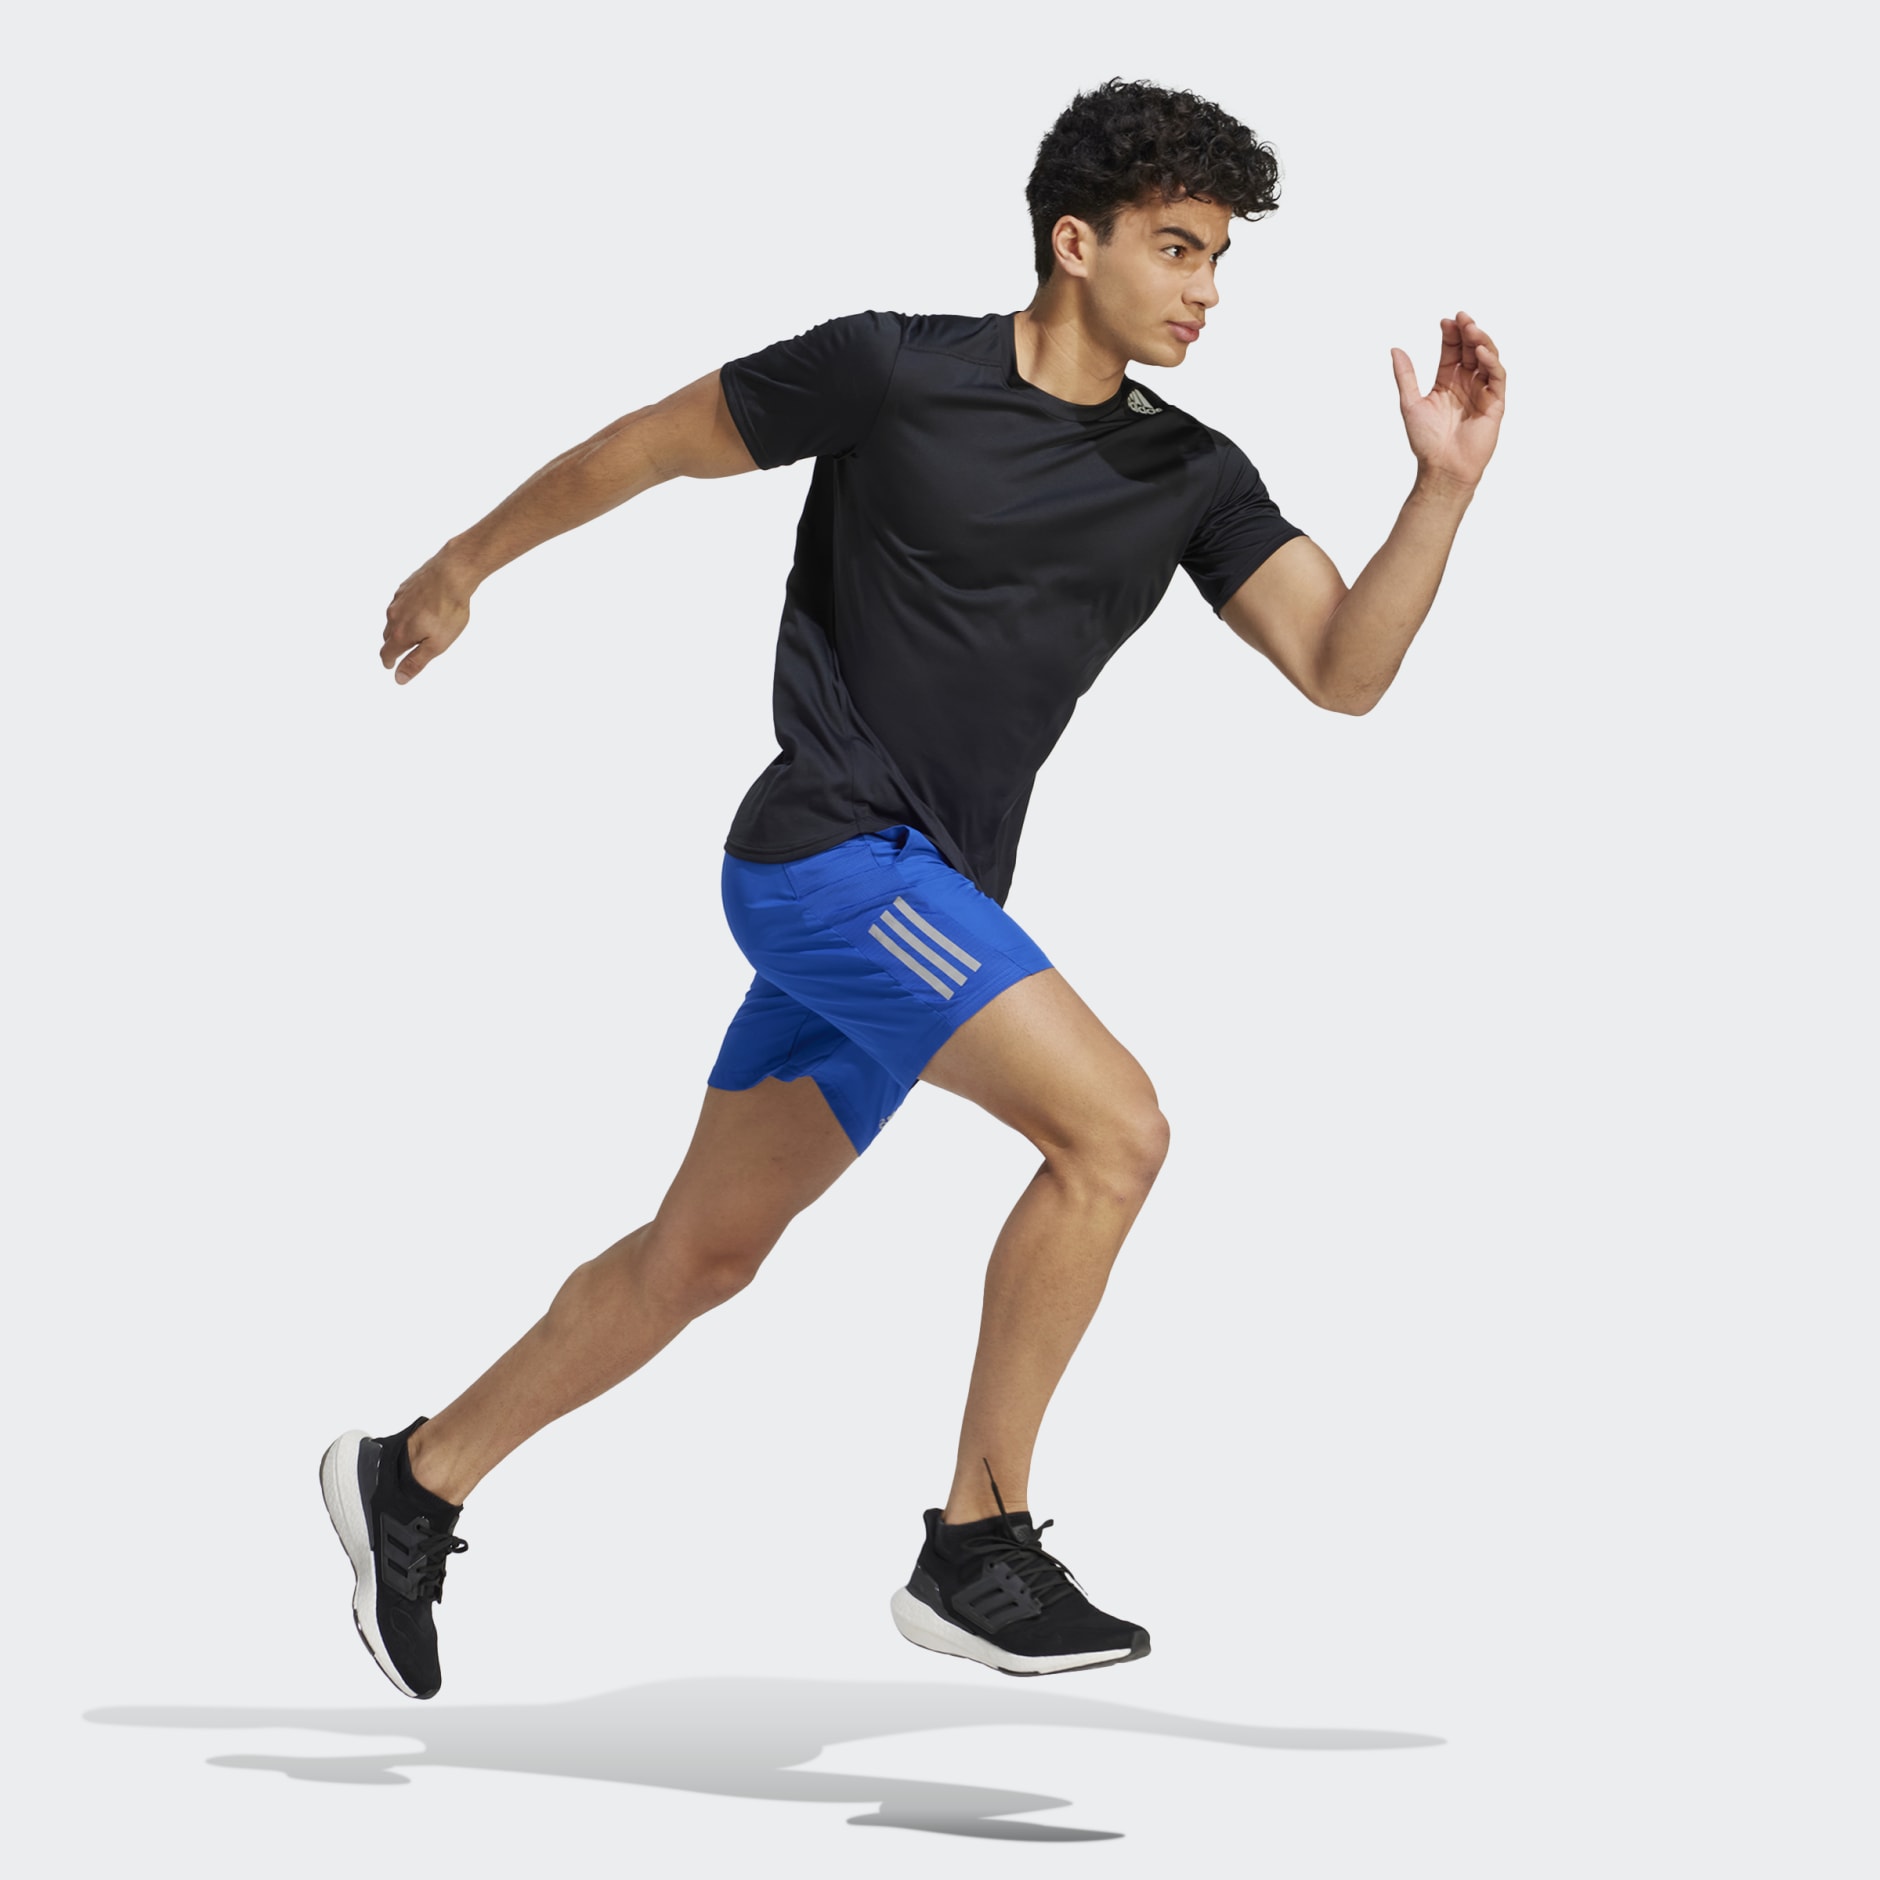 adidas Own the Run Shorts - Blue | adidas UAE